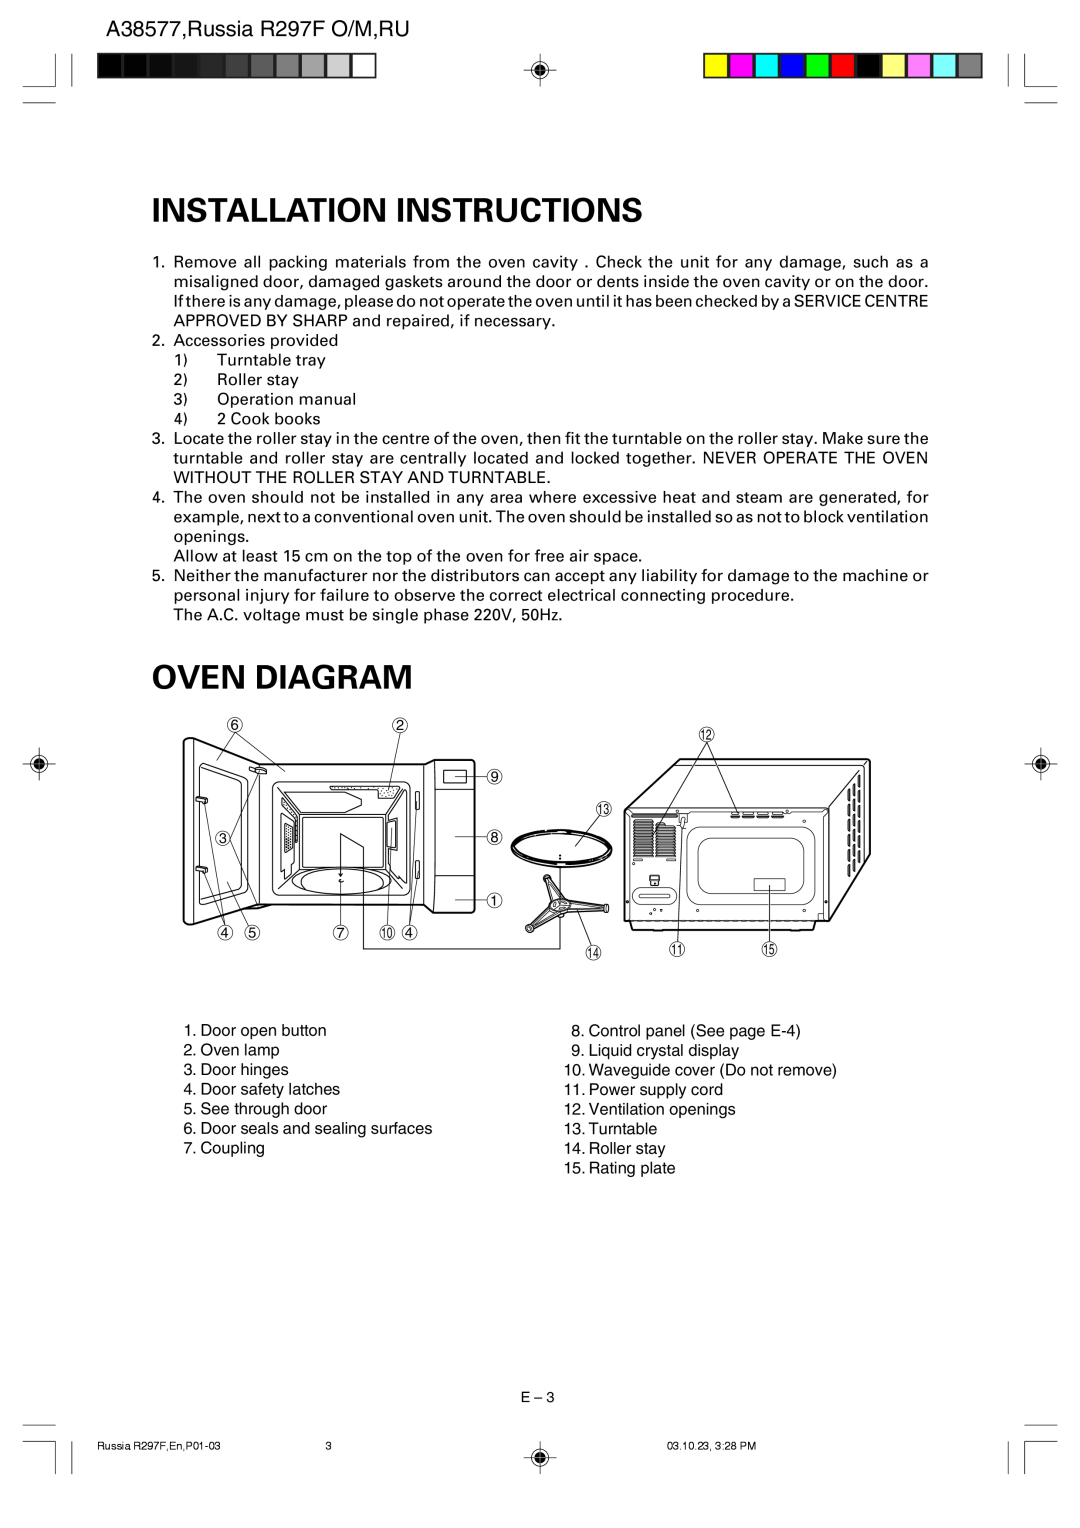 Sharp R-297F operation manual Installation Instructions, Oven Diagram, A38577,Russia R297F O/M,RU 